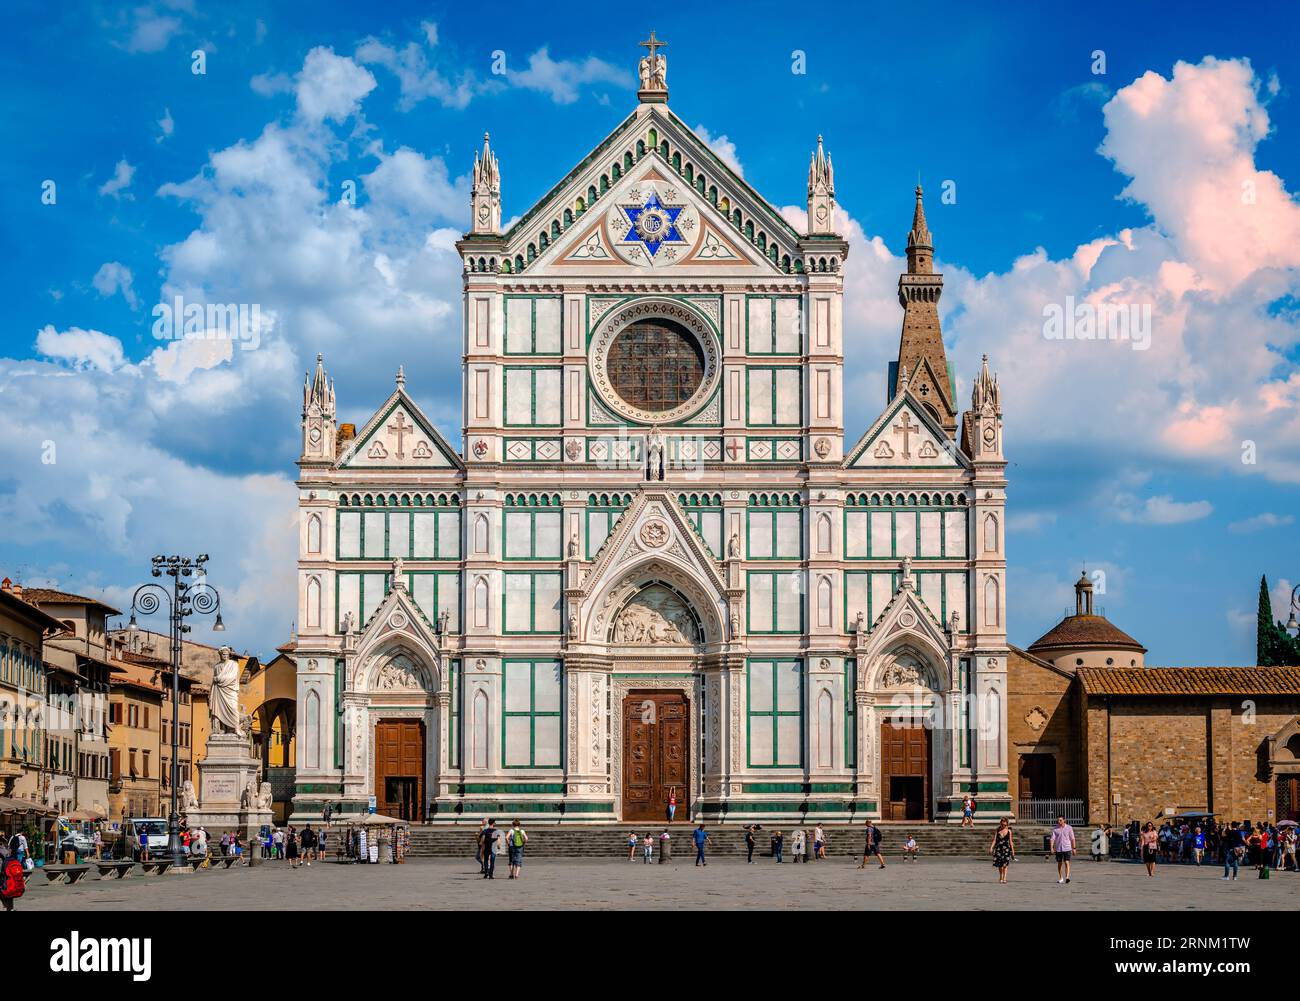 Basilica di Santa Croce, the principal Franciscan church in Florence, Italy, situated on the Piazza di Santa Croce. Stock Photo